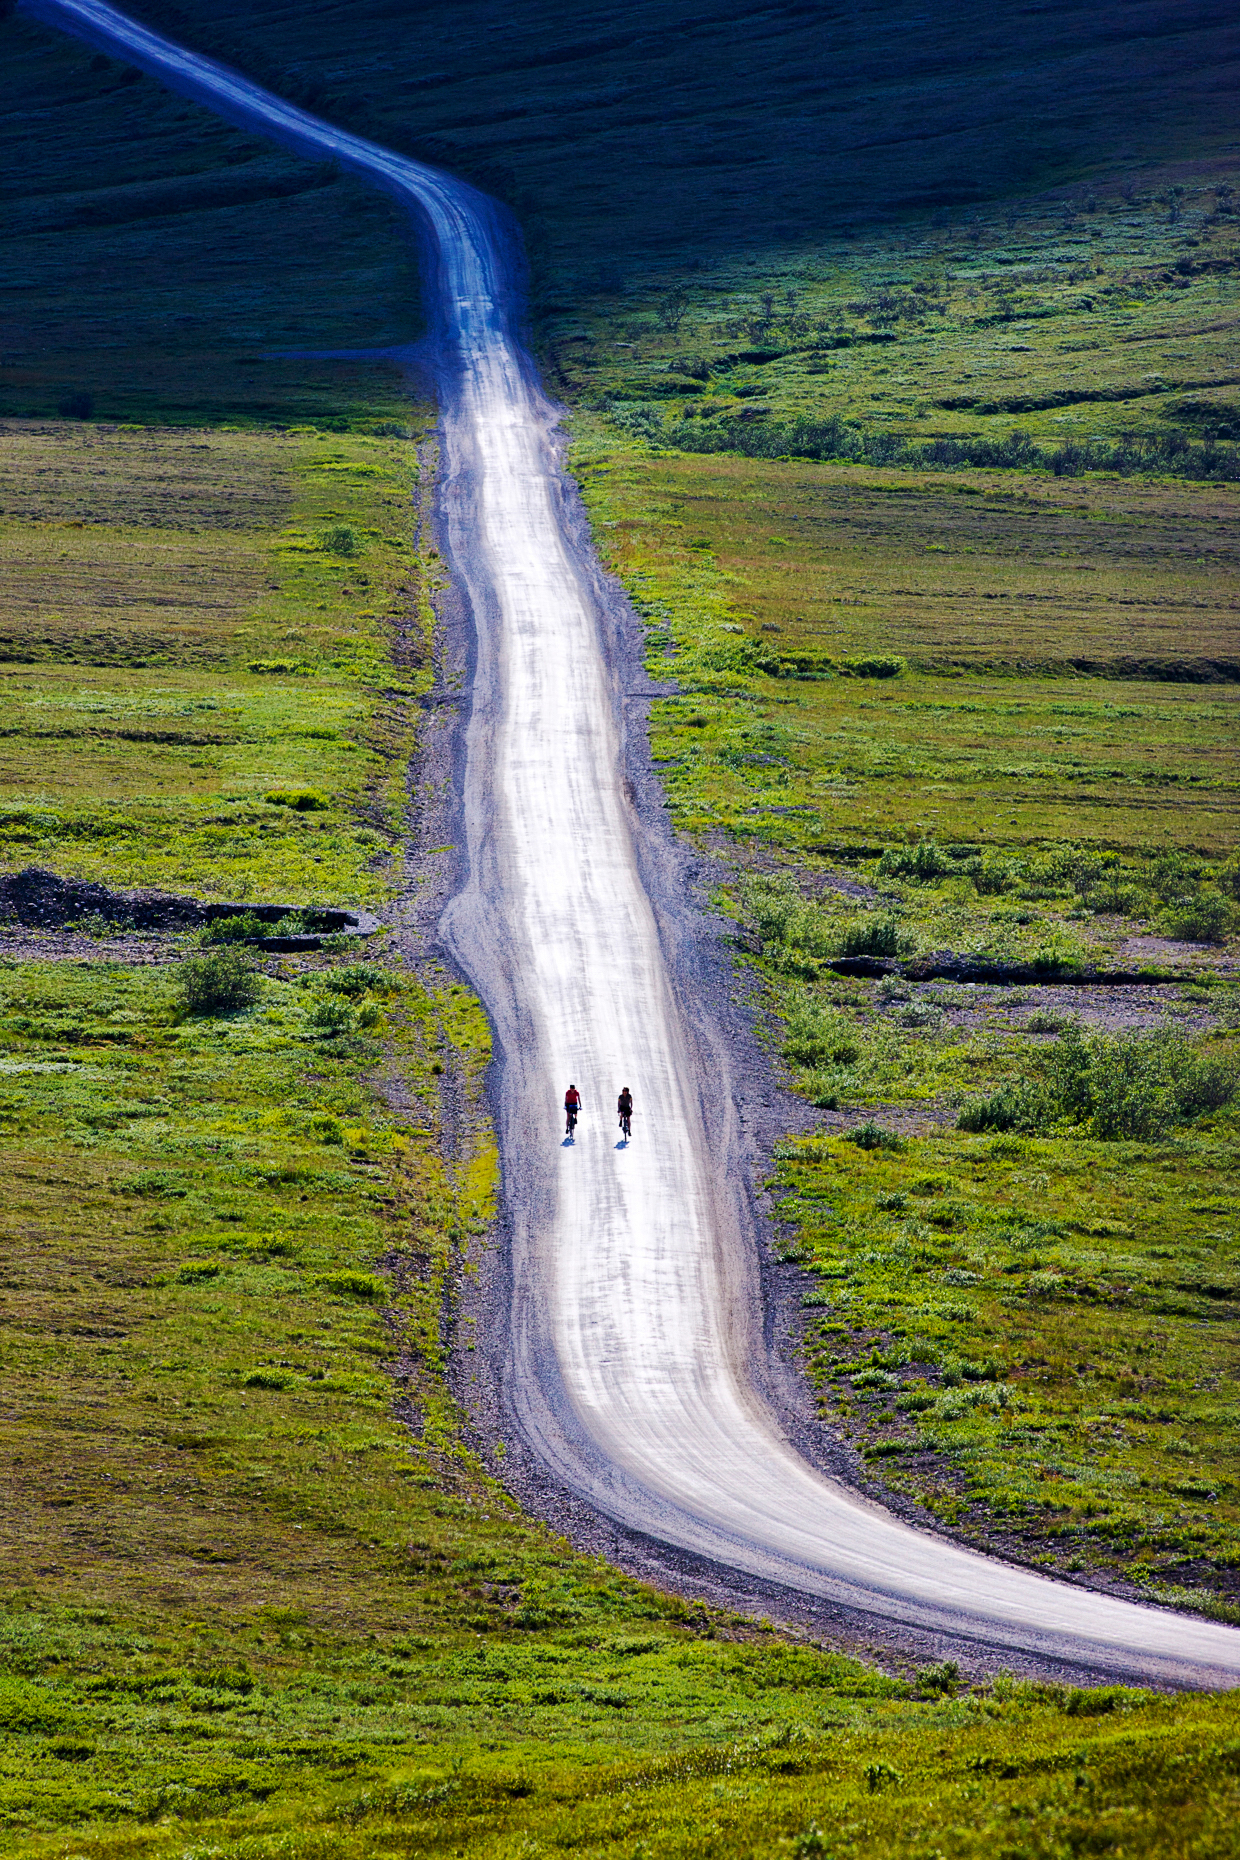 Two cyclists riding the limited access road towards Stony Dome, Denali National Park, Alaska, USA